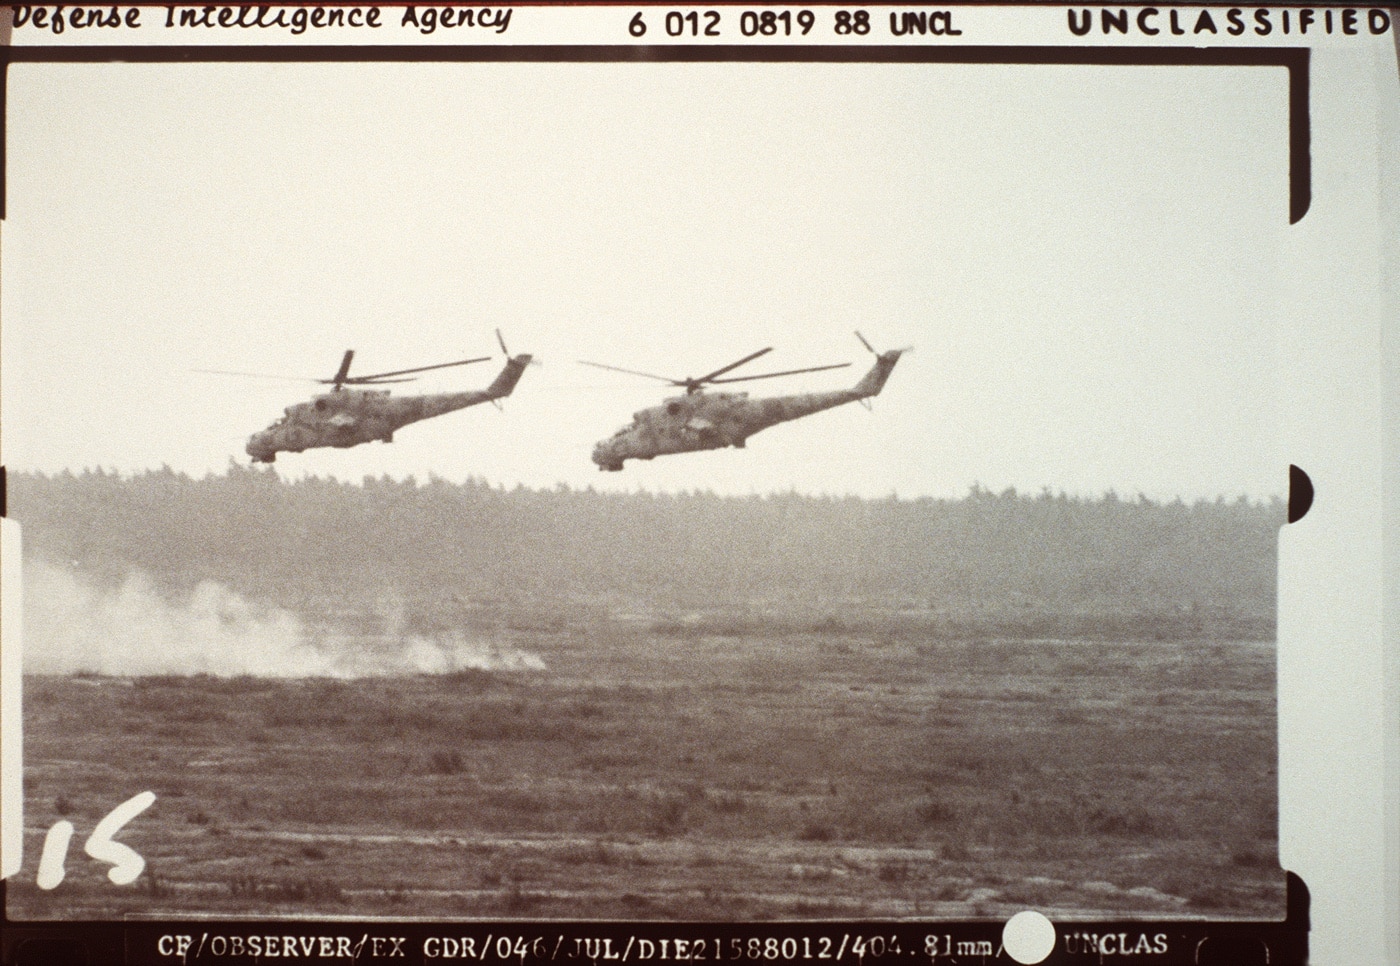 mi-24 photos from defense intelligence agency